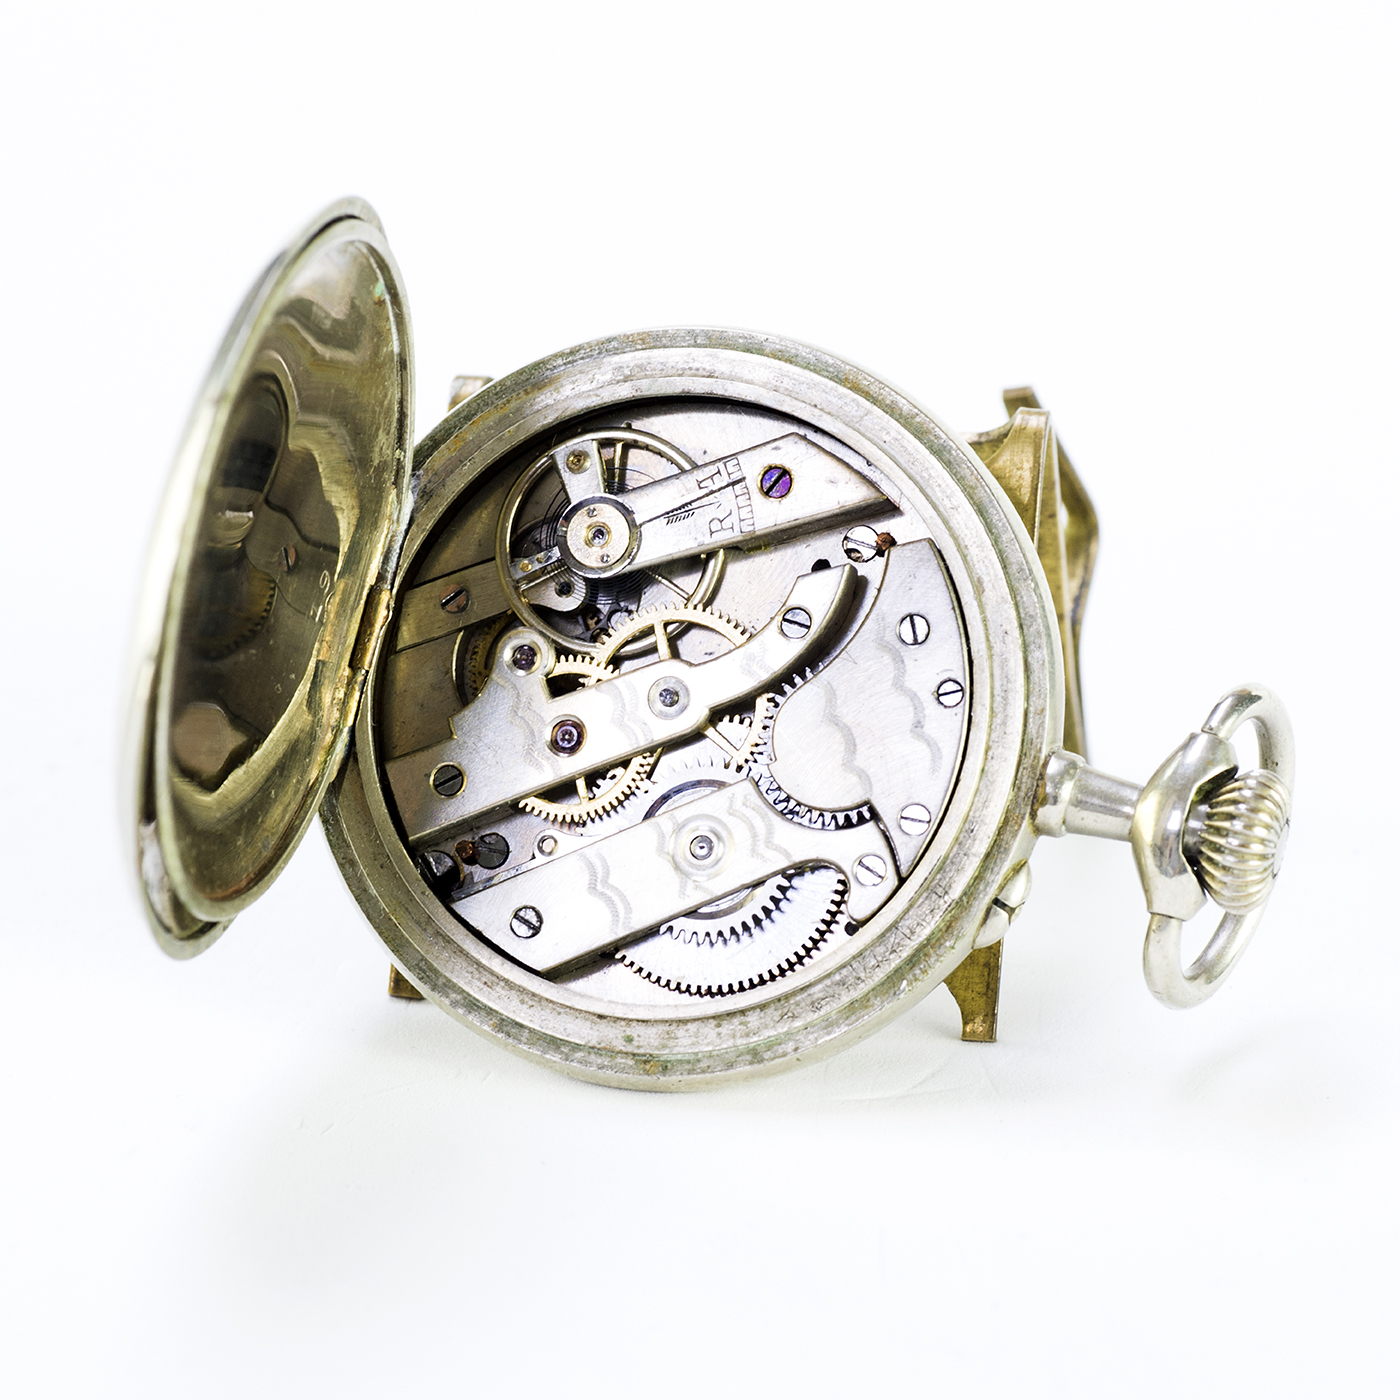 LA SOLIDARITÉ HORLOGER (BESANÇON). Reloj de bolsillo, lepine y remontoir. Francia, ca. 1890